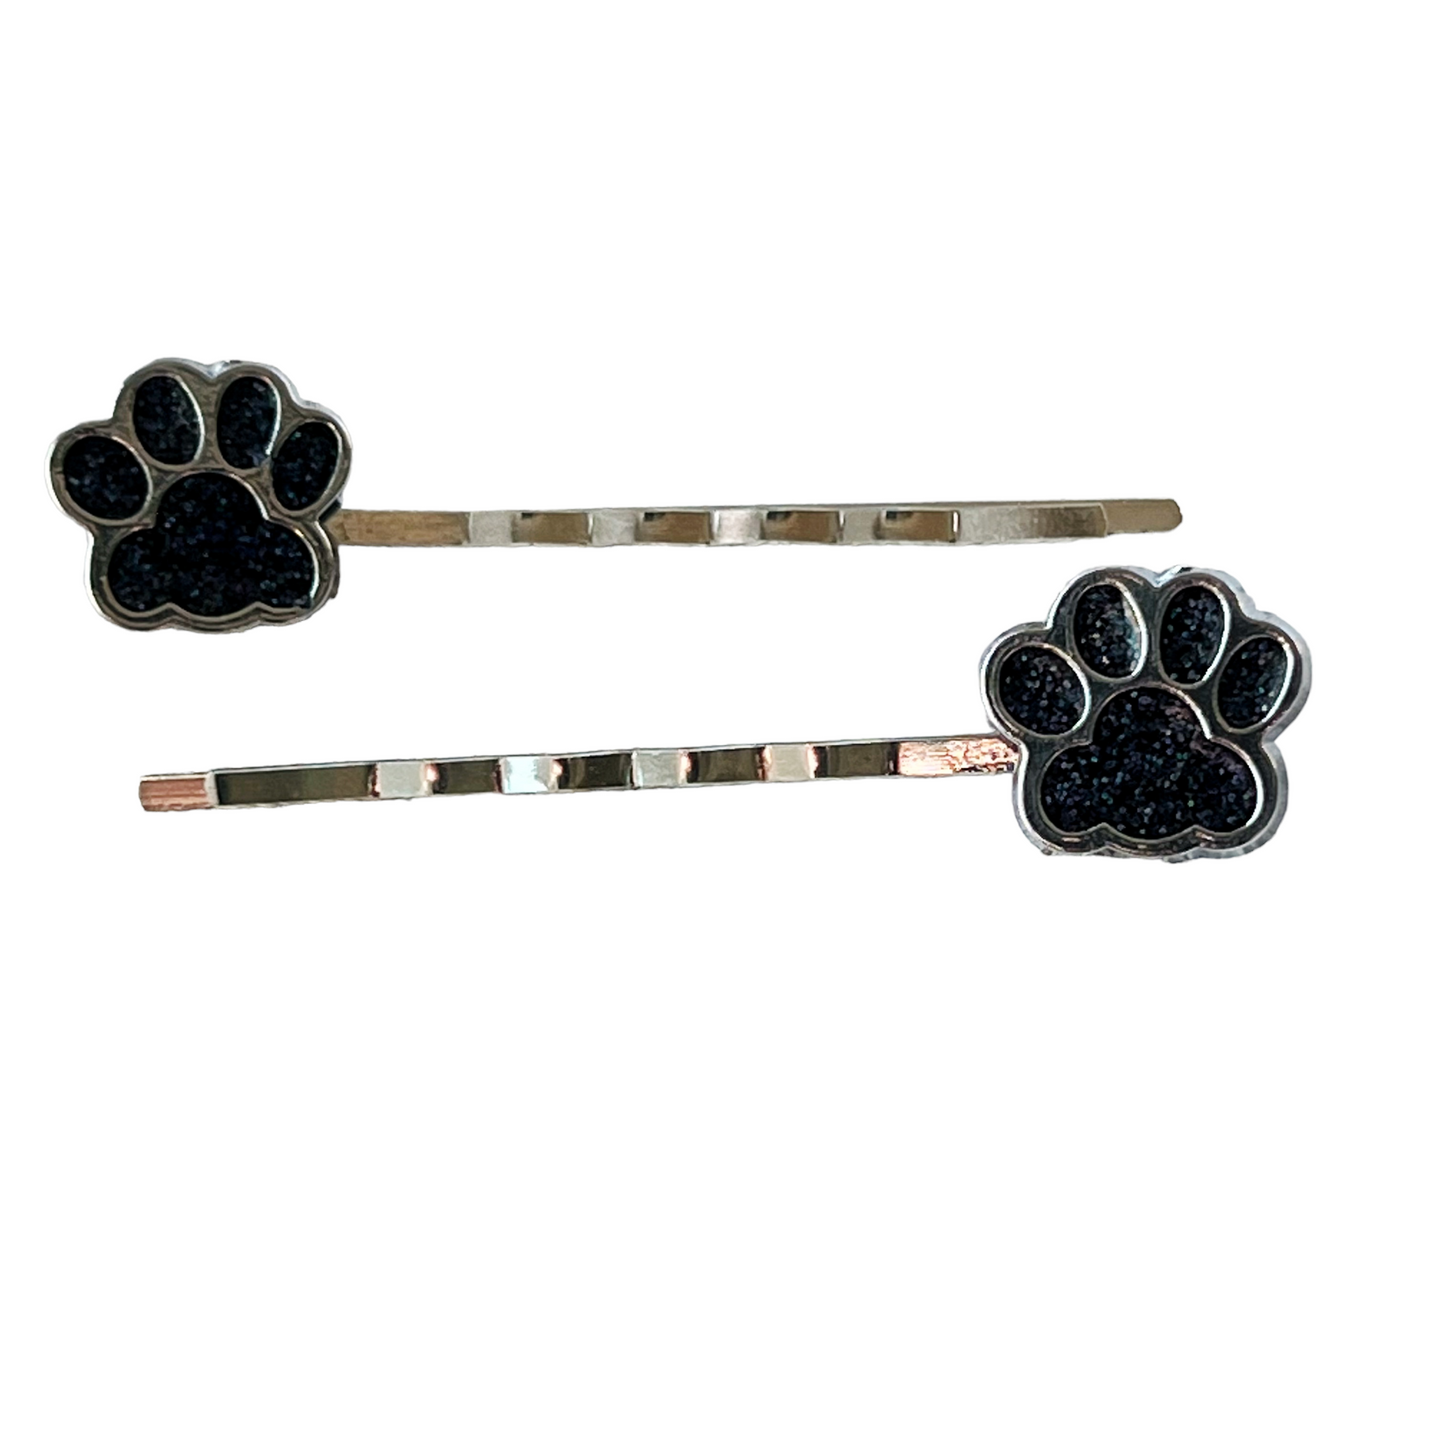 Black Glitter Paw Print Hair Pins - Playful & Stylish Animal-Inspired Accessories